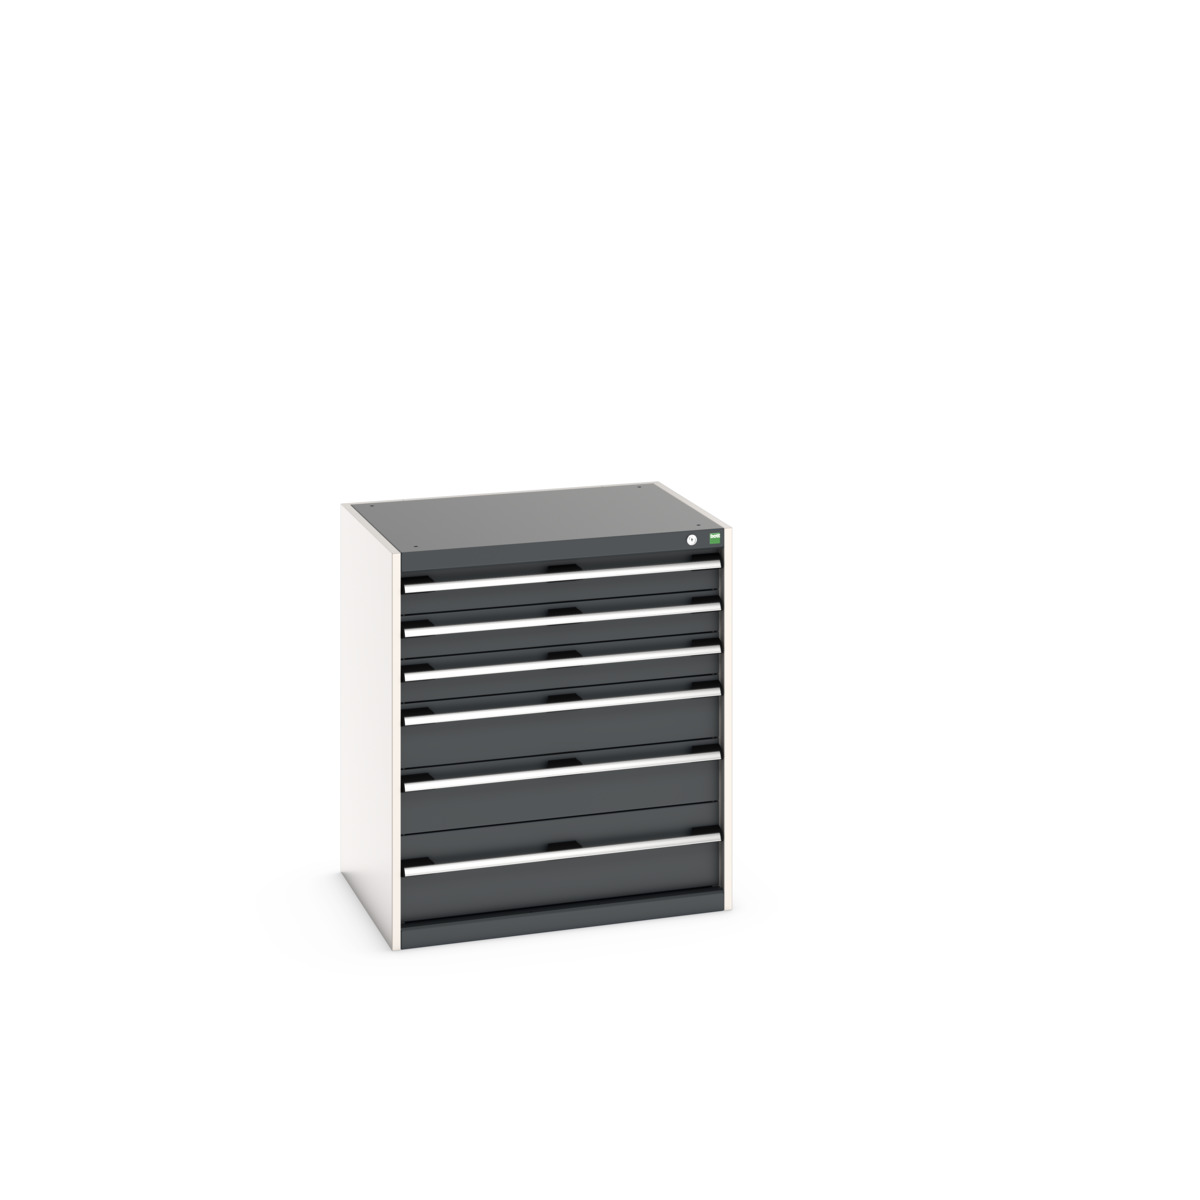 40020147. - cubio drawer cabinet